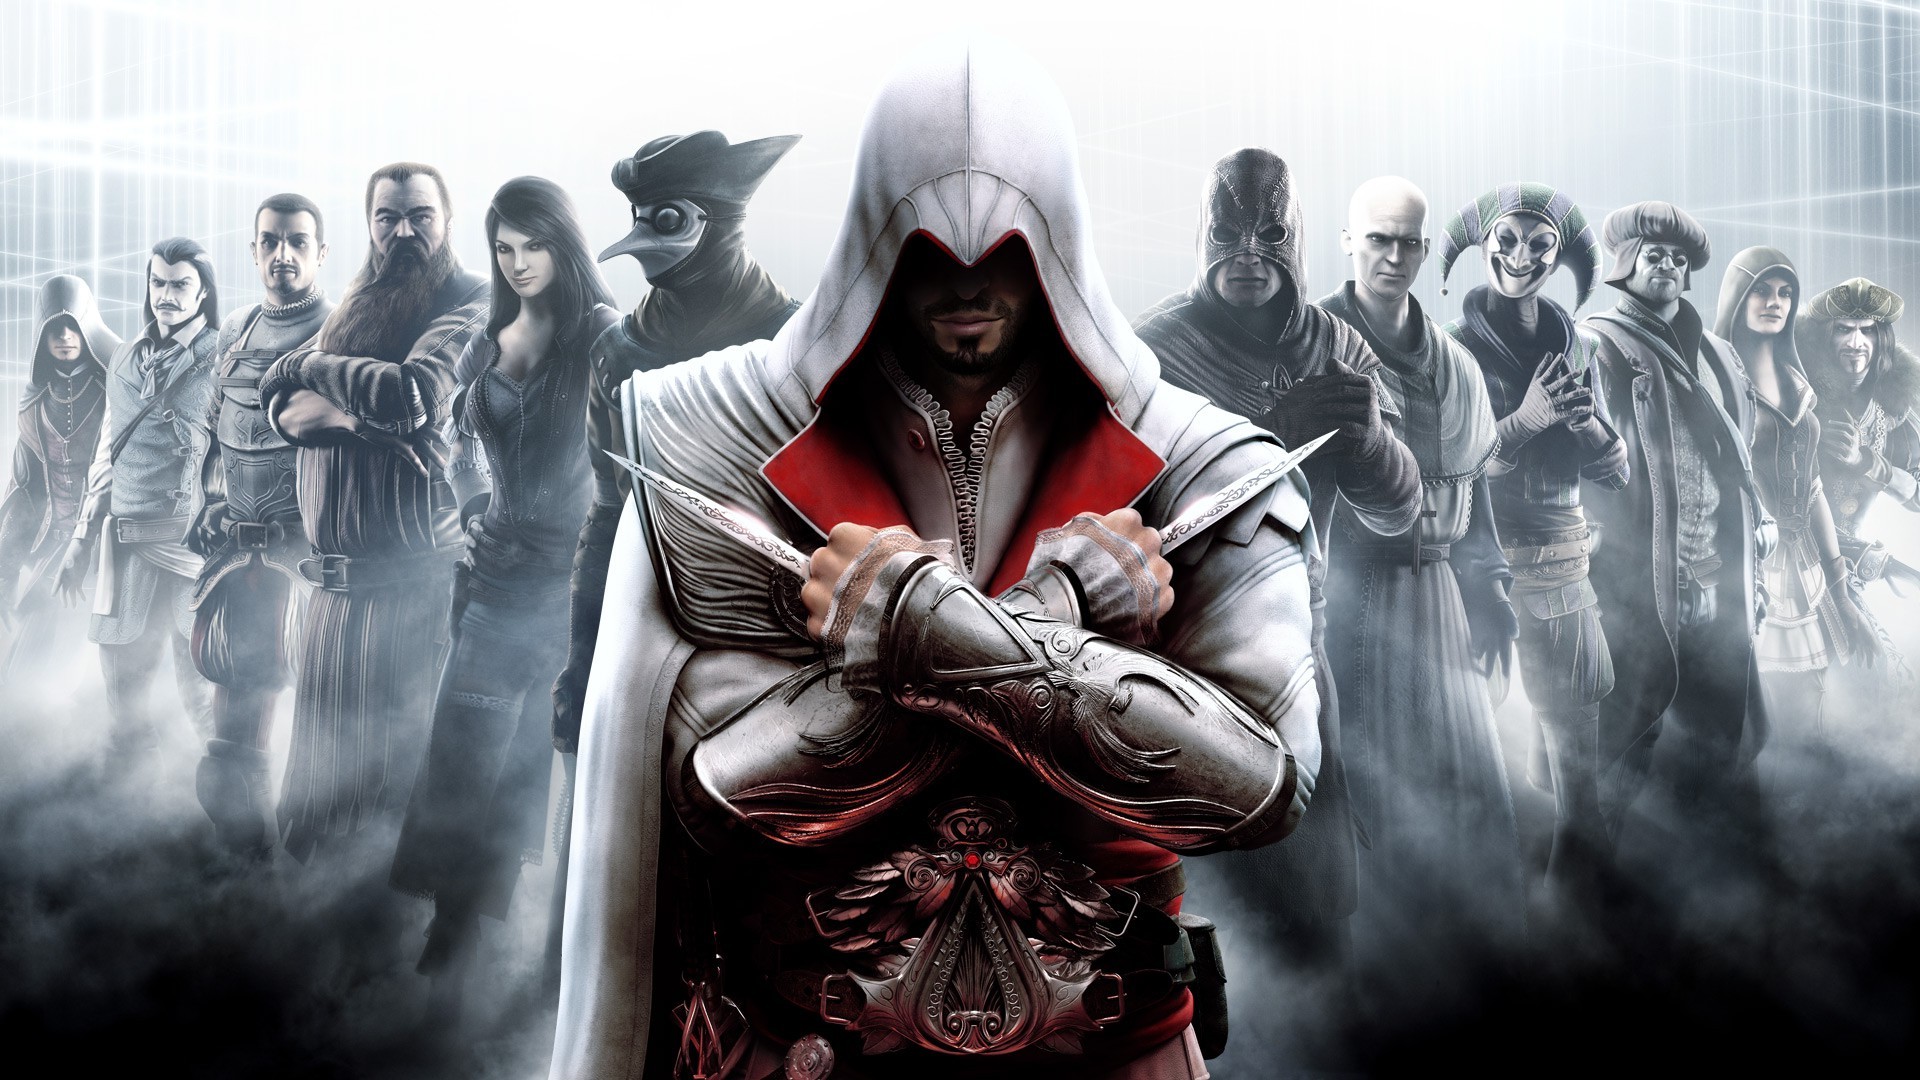 play assassin creed brotherhood online free